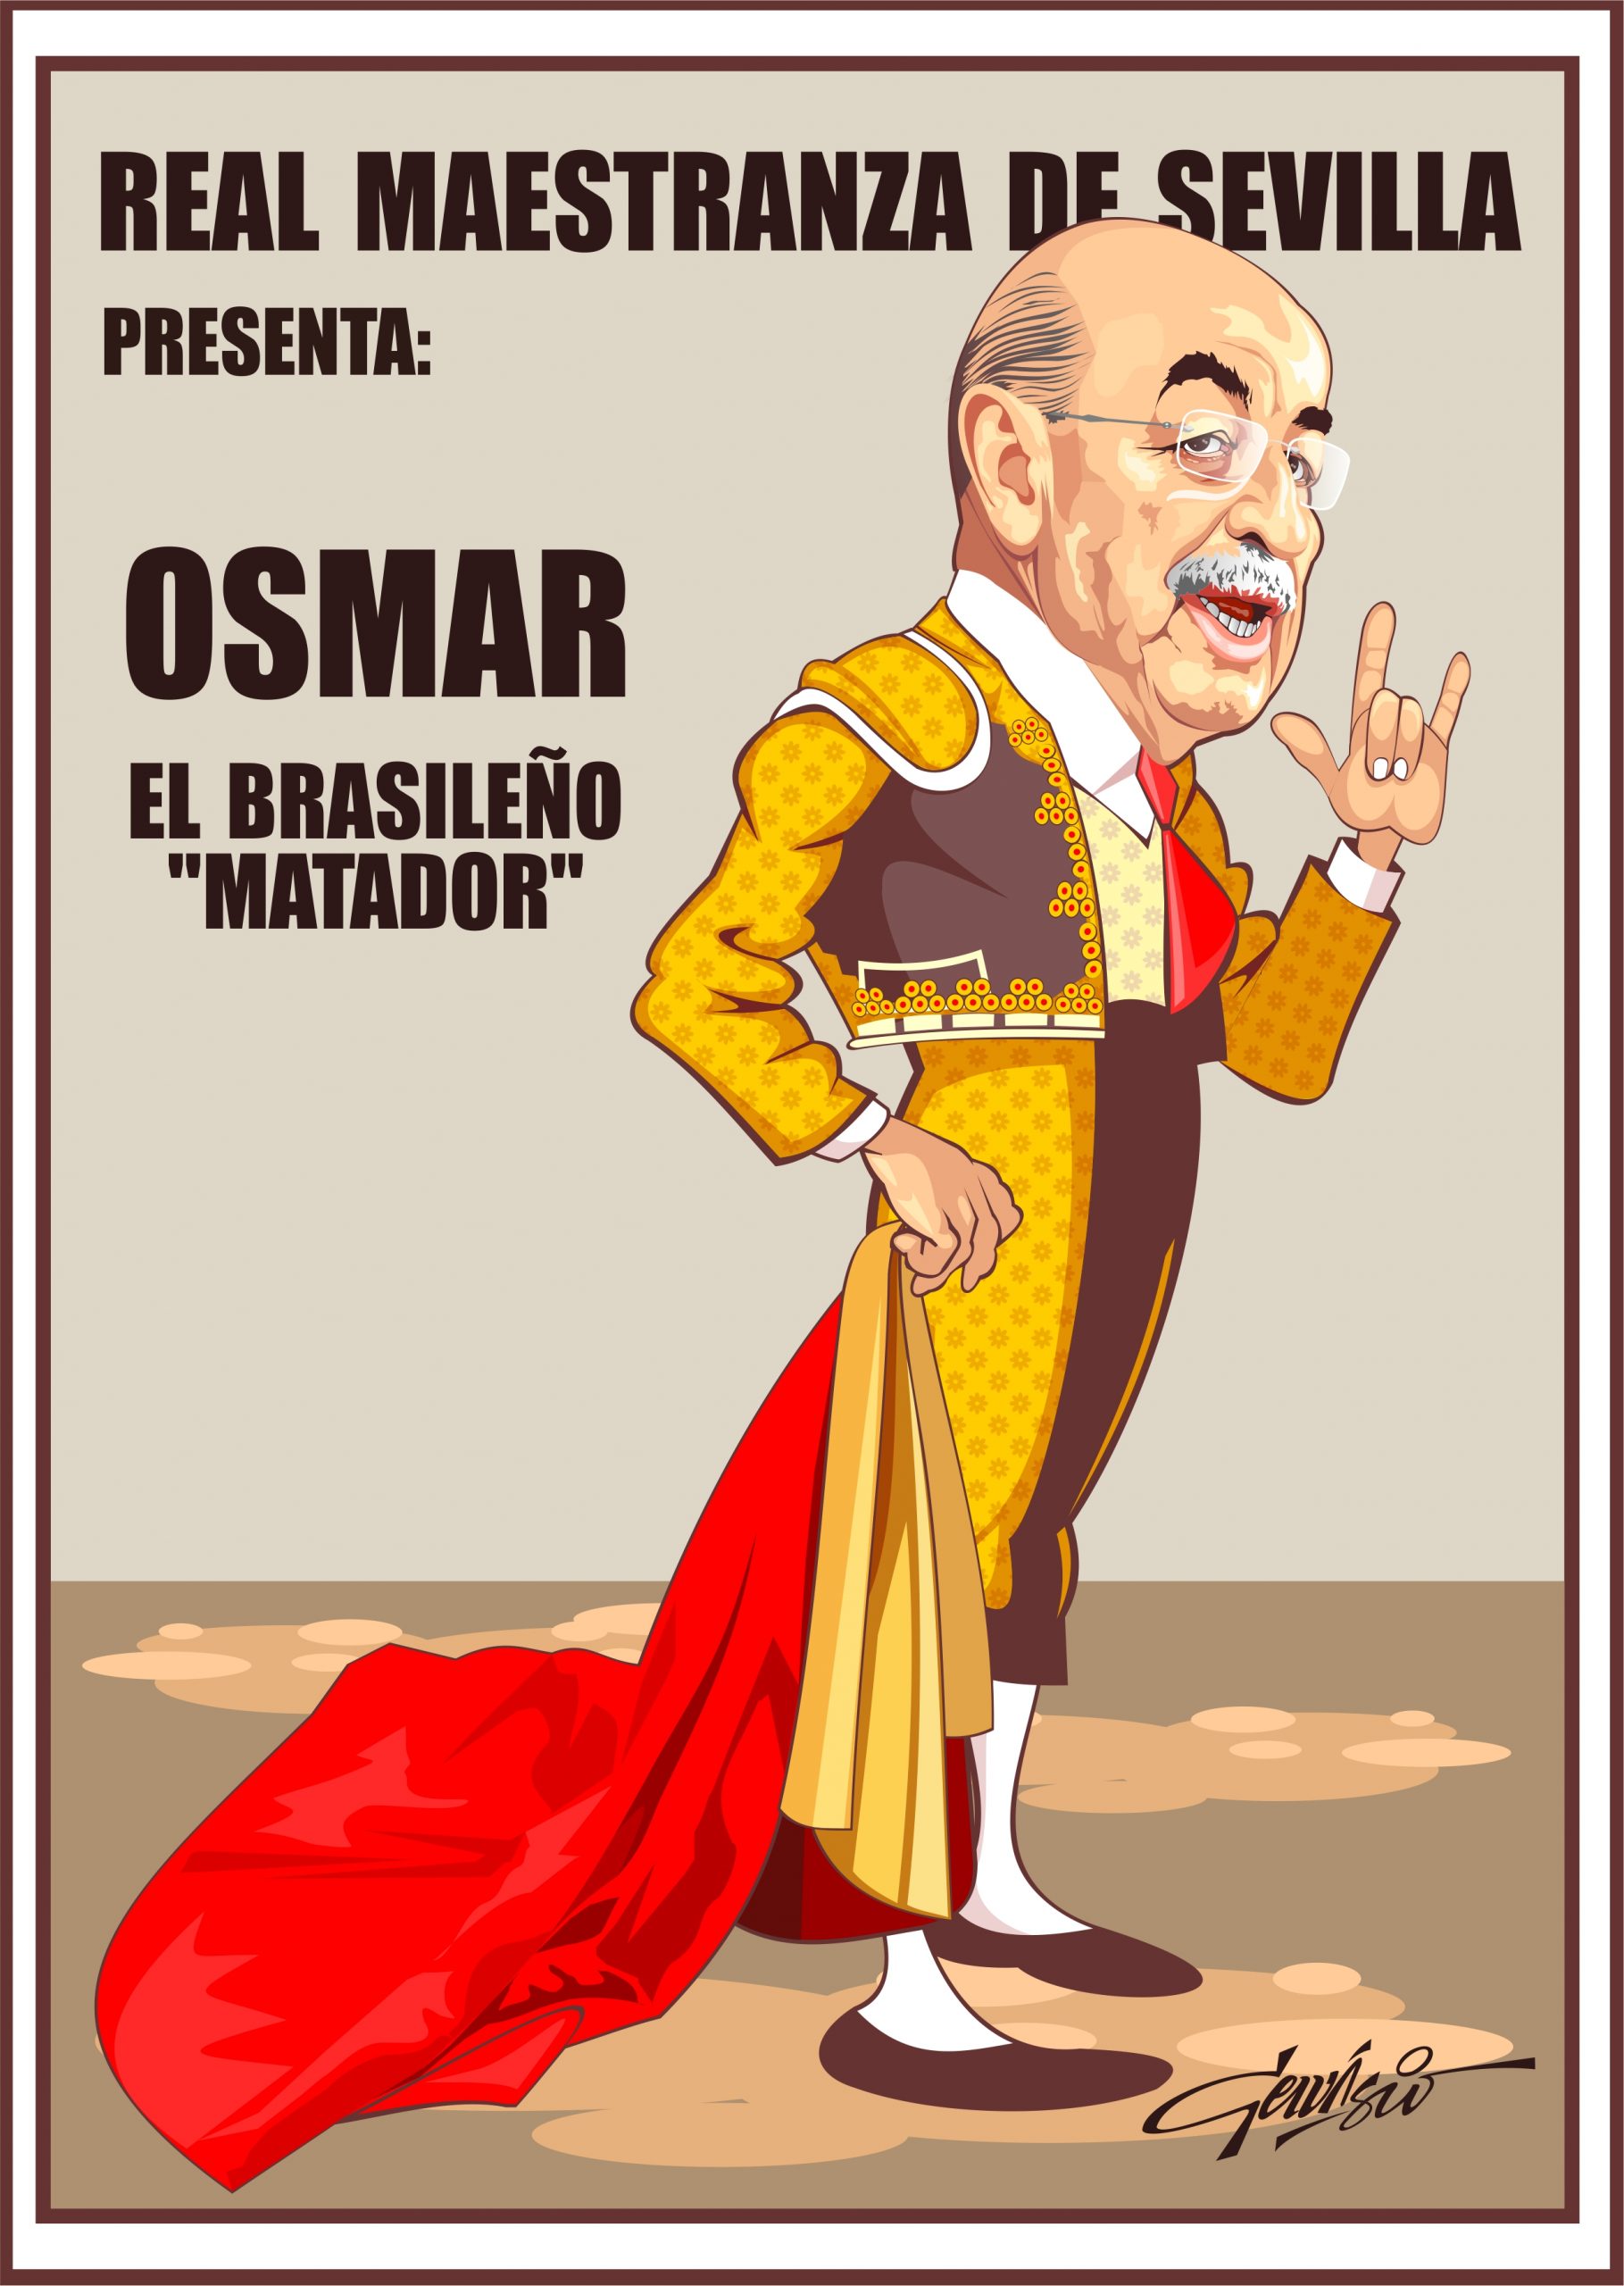 Osmar El Brasileño "Matador"